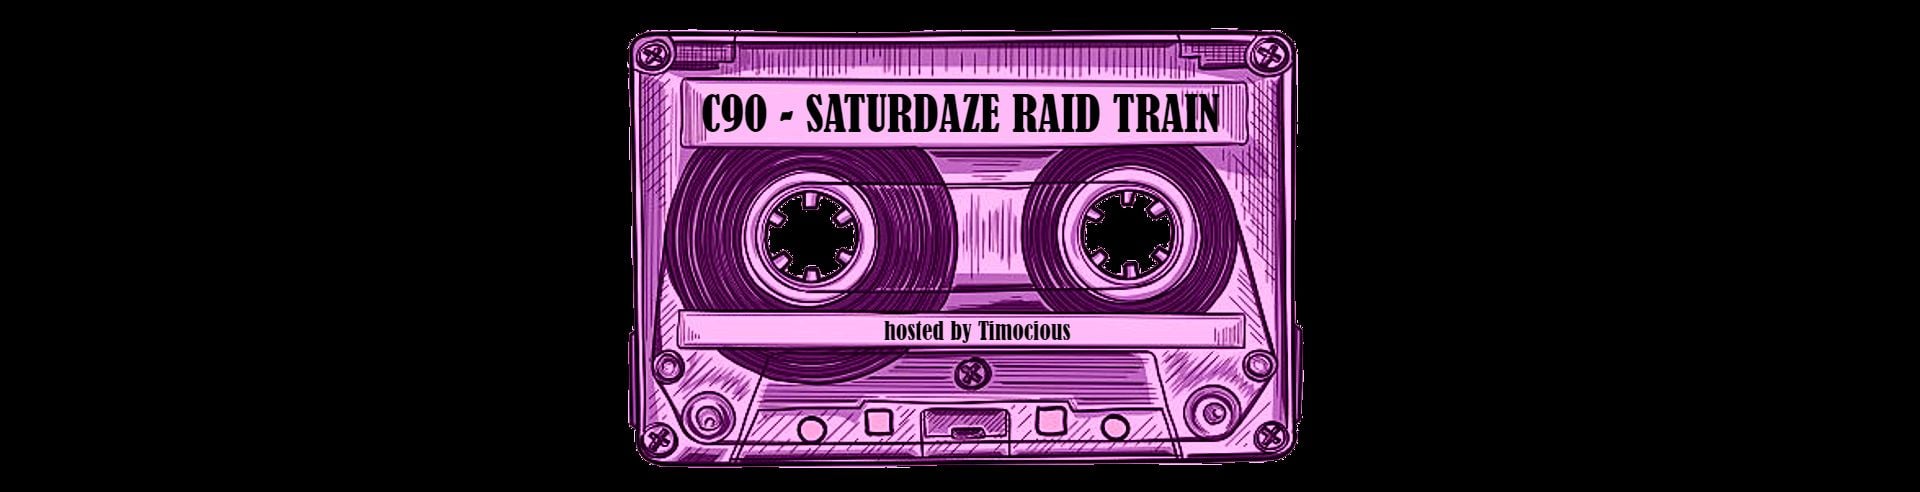 C90 - Saturdaze Raid Train #2 - Jackin, Deep & Funky House